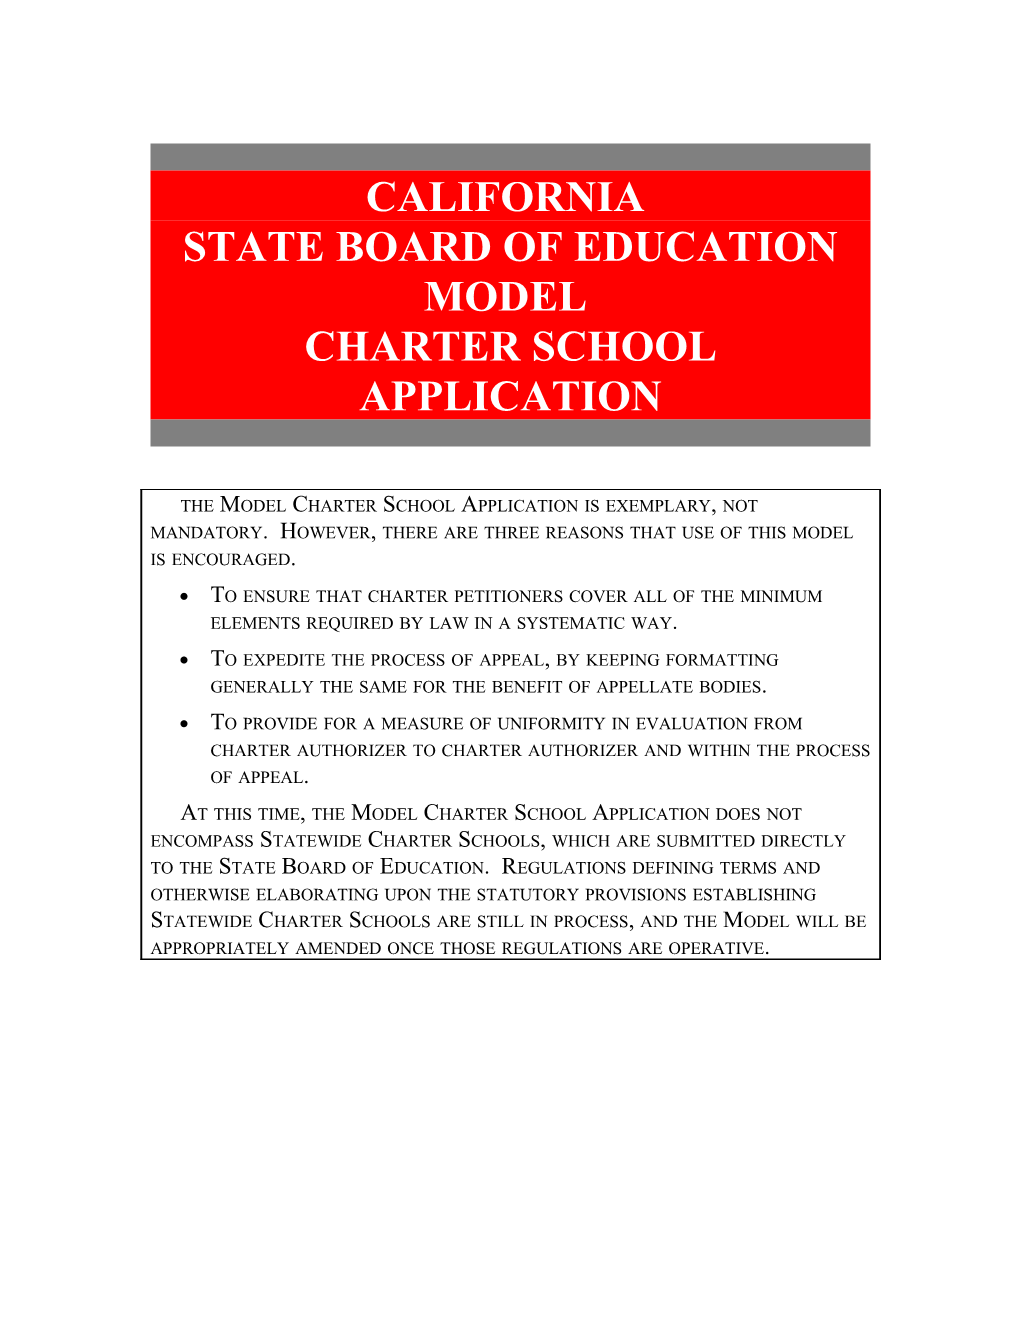 Model Charter School Applications - Resources (CA Dept of Education)